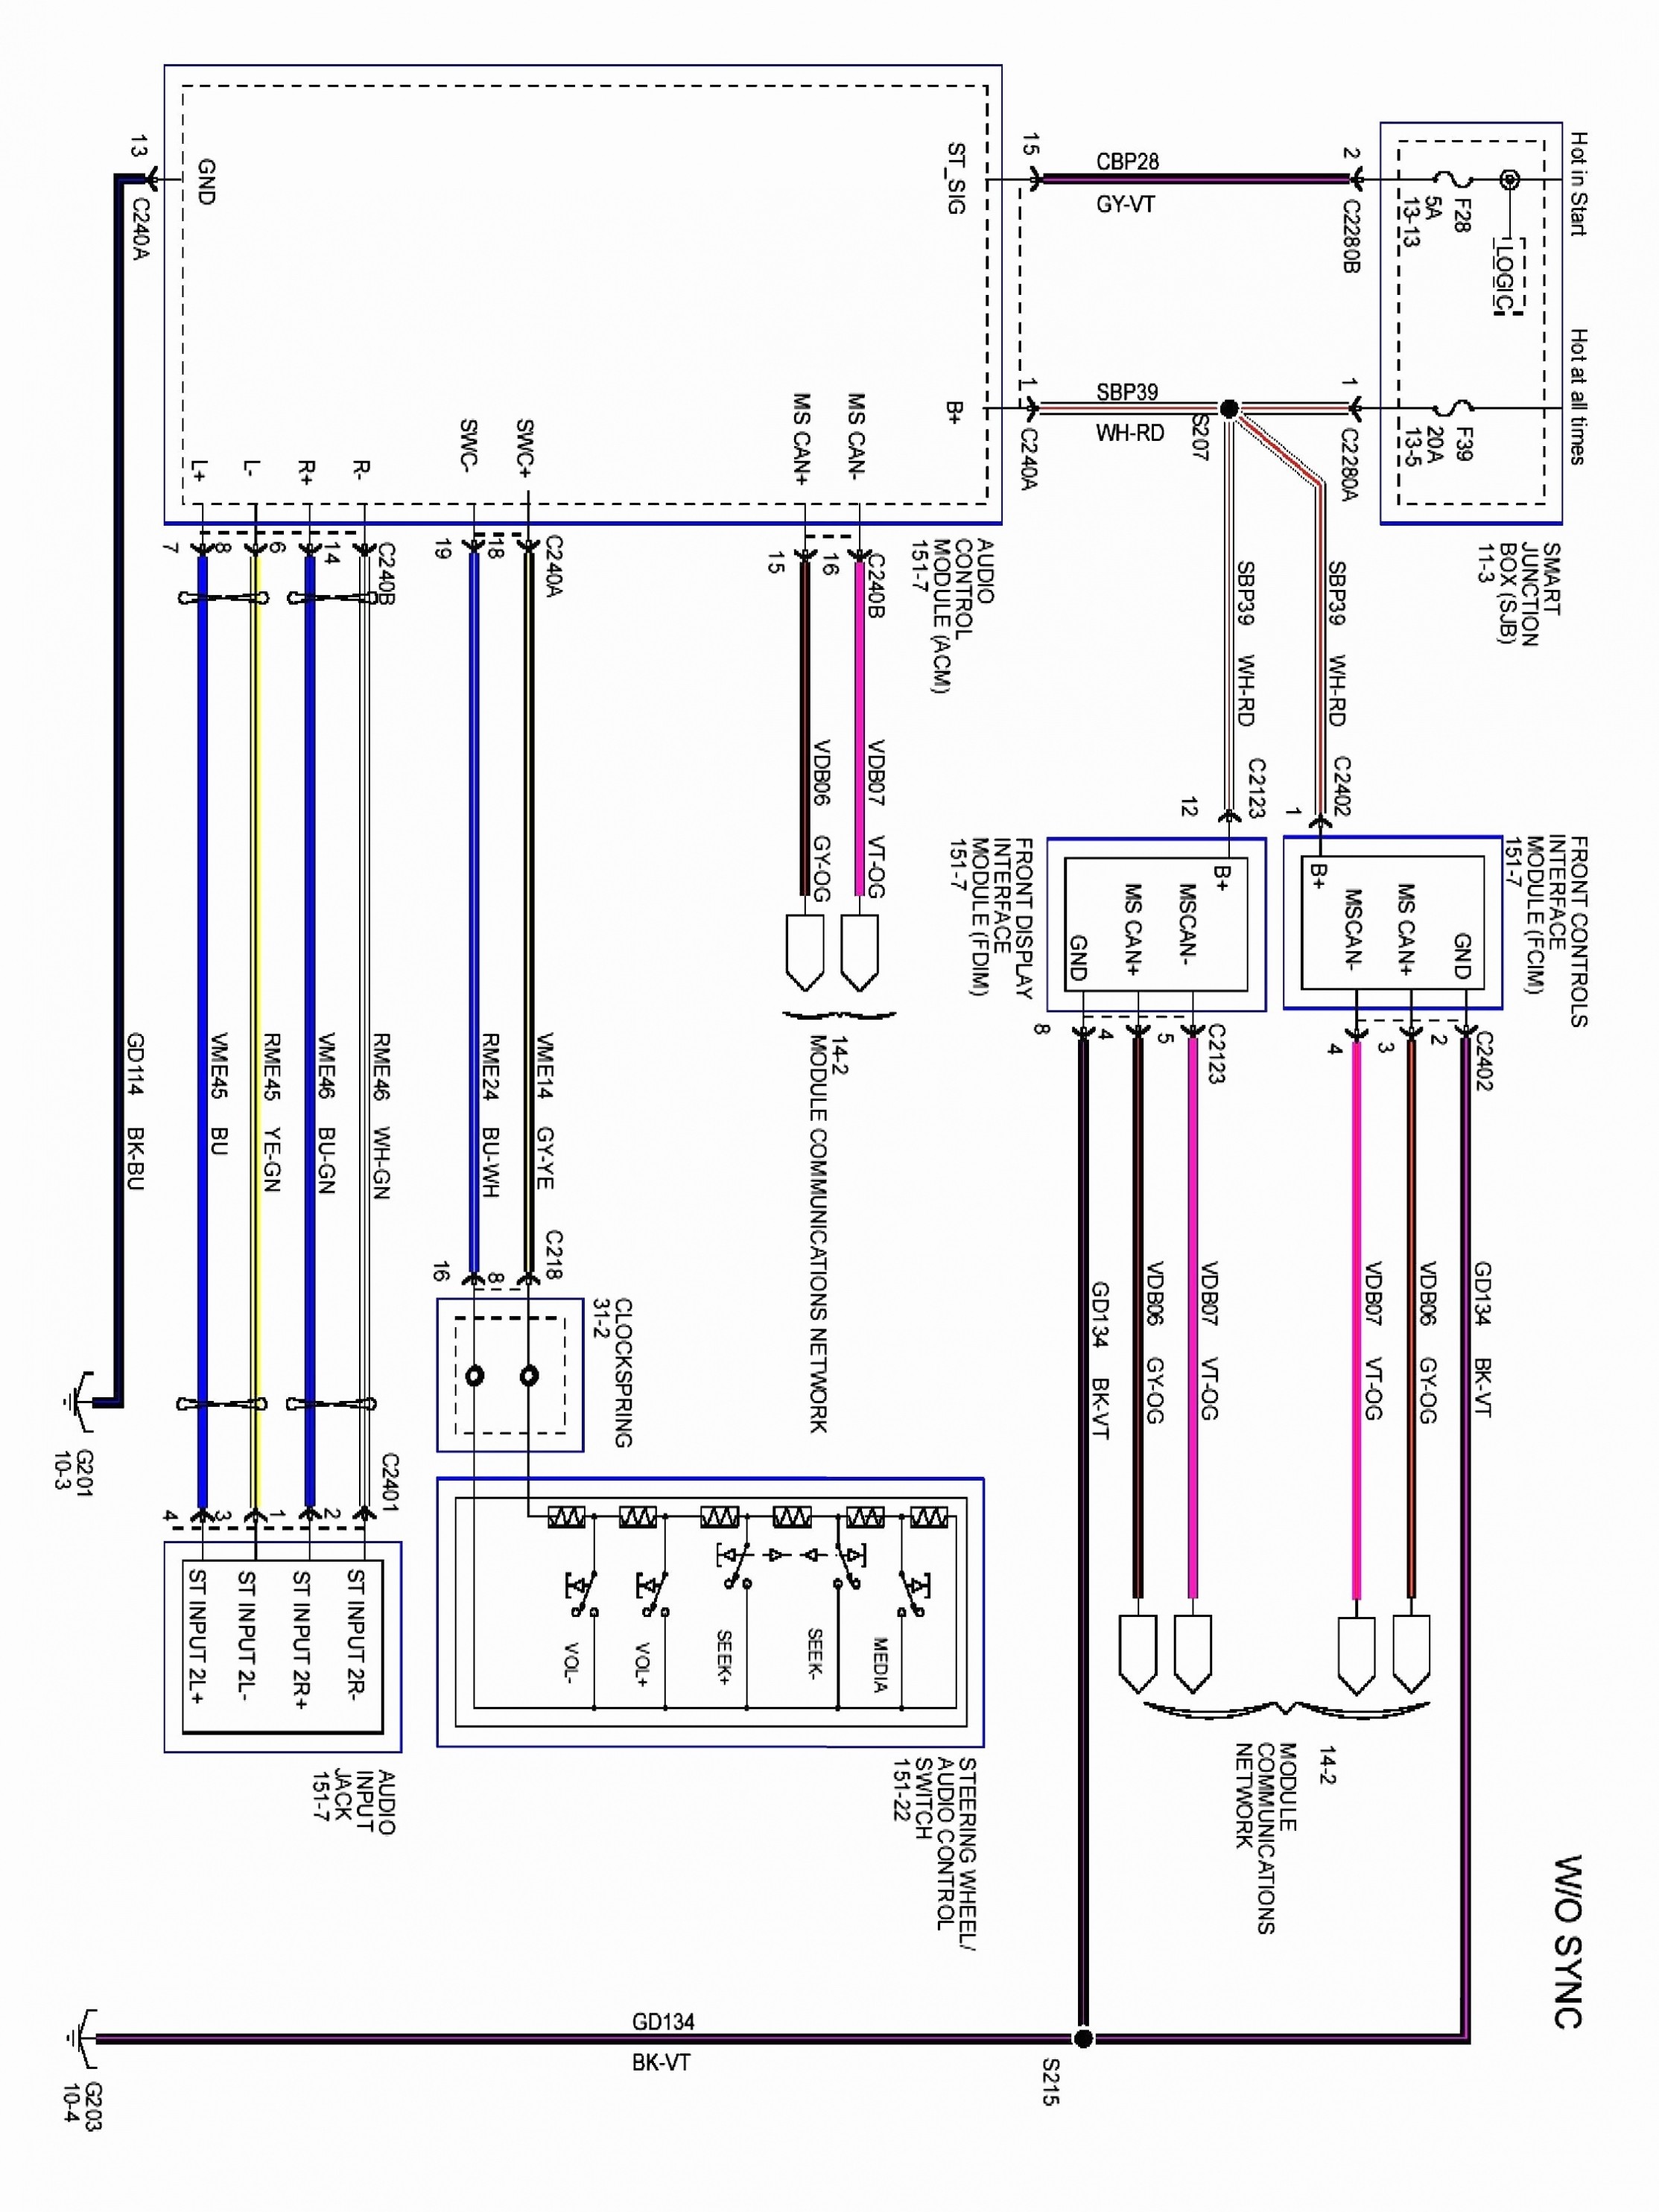 Engine Layout Diagram aspire Xc603g Wiring Diagram Another Blog About Wiring Diagram • Of Engine Layout Diagram